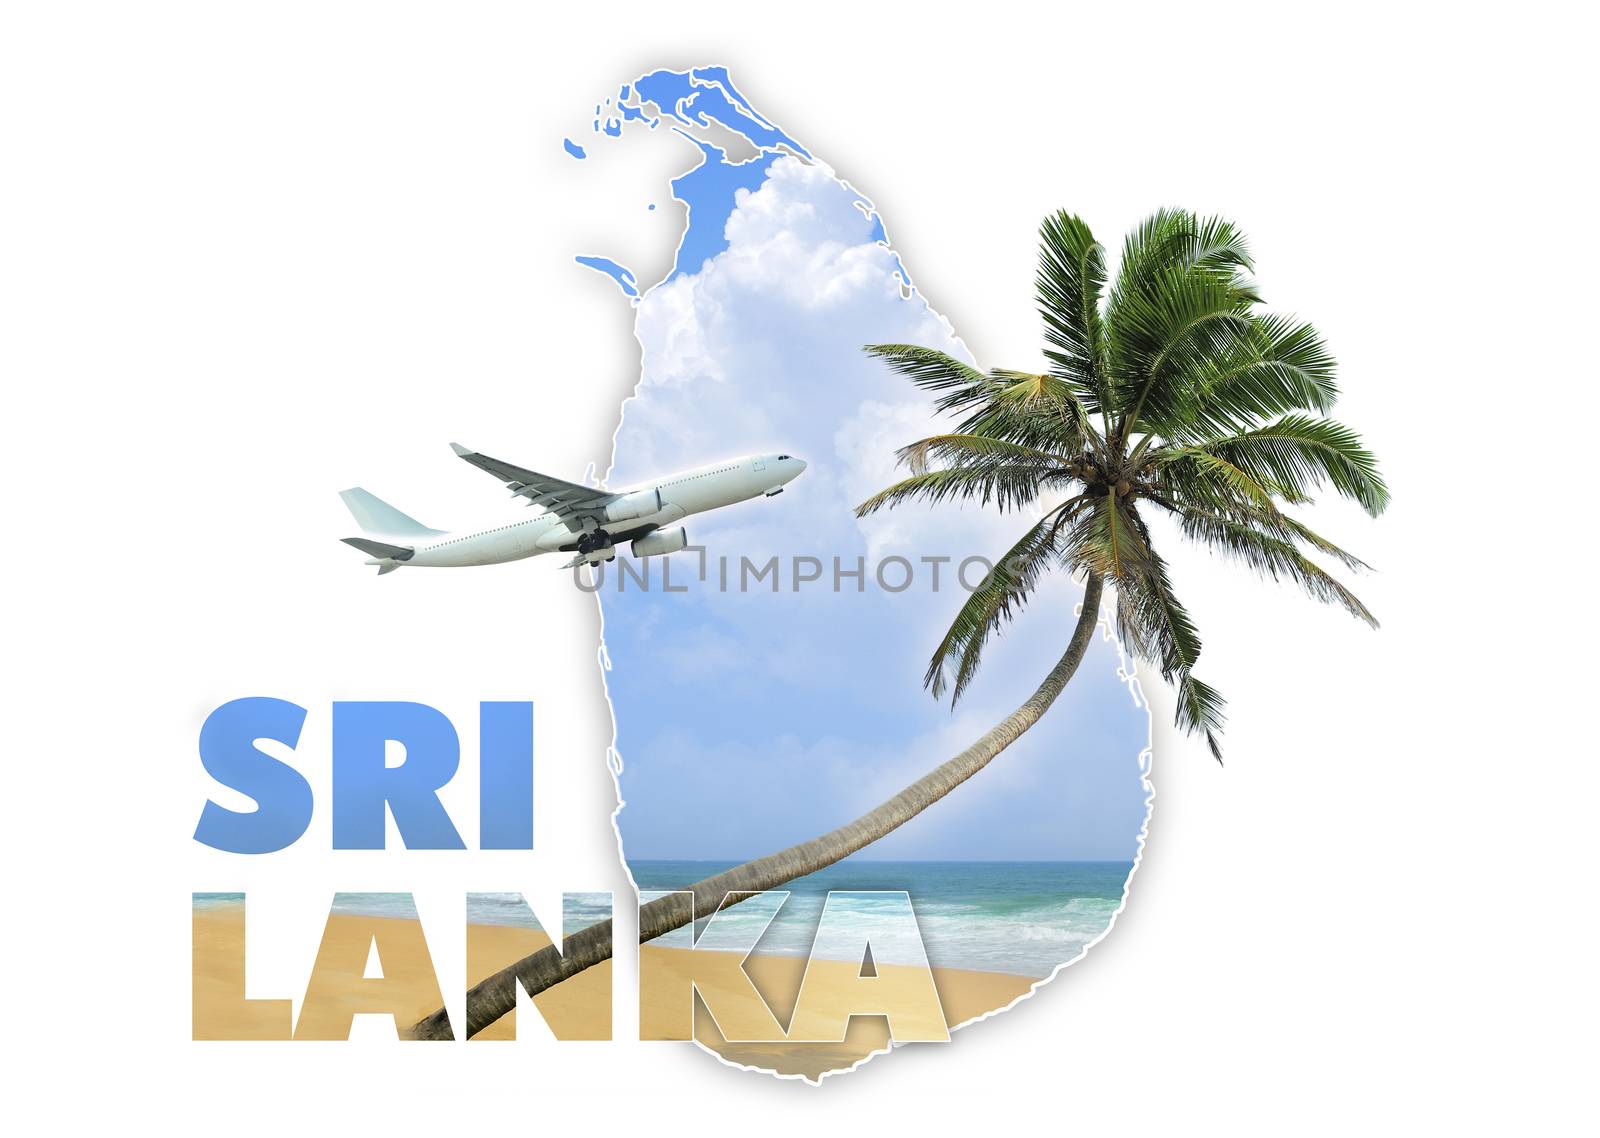 Sri Lanka travel concept on white background